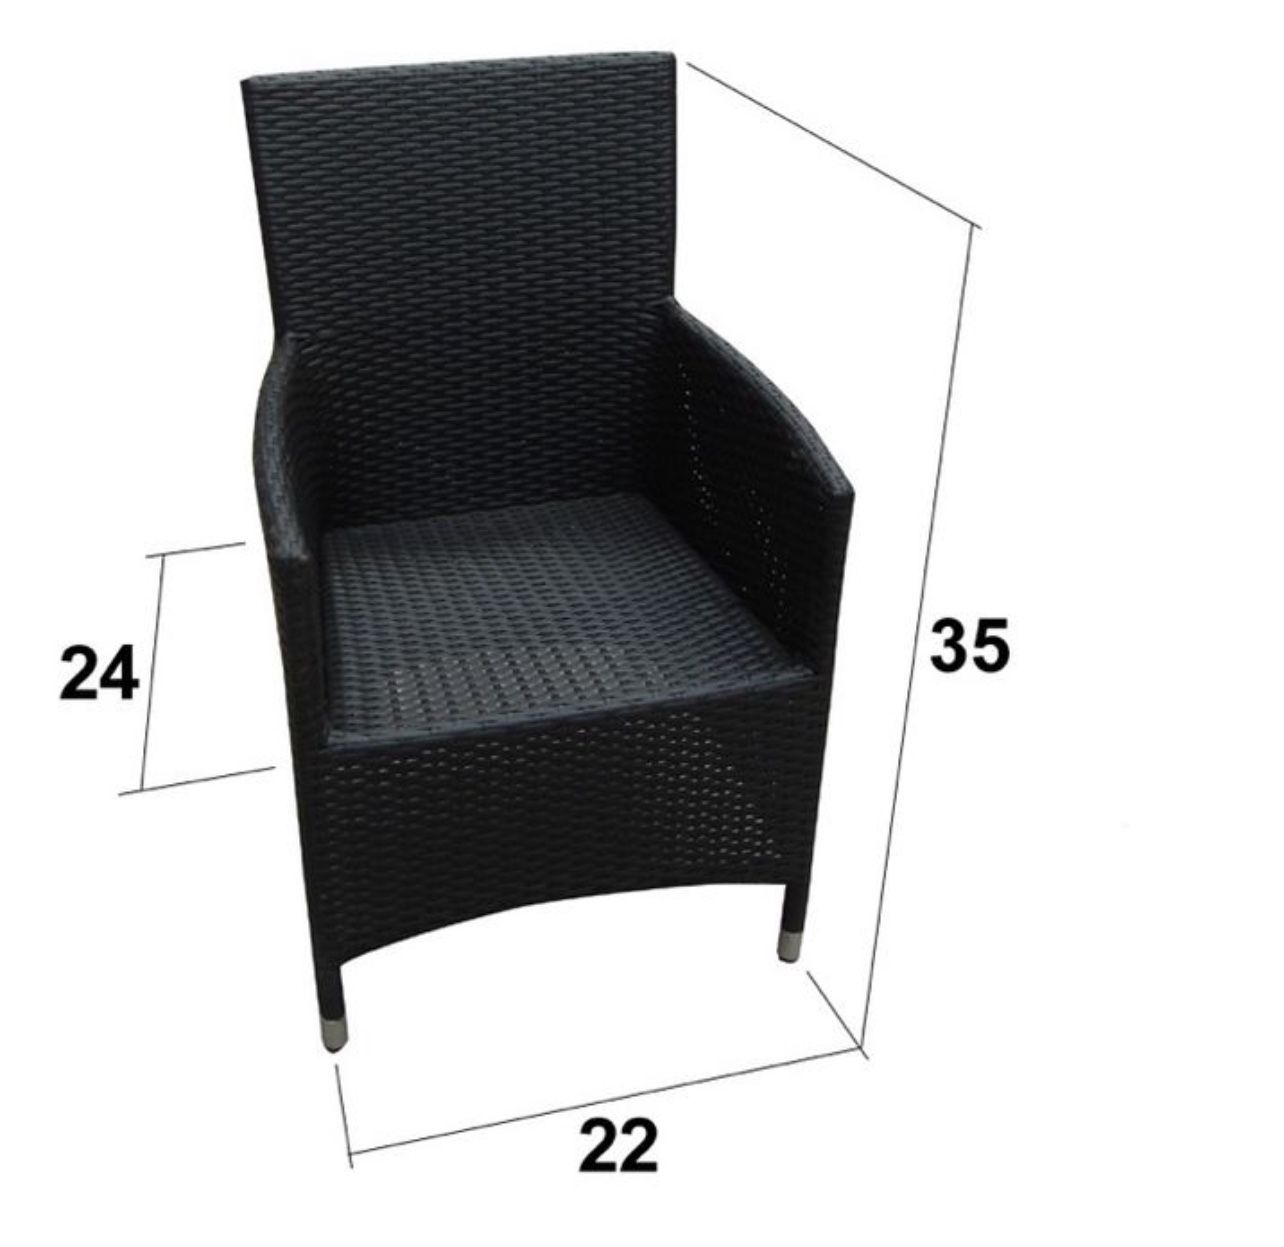 2 OHANA Wicker Patio Chairs with Beige Cushions - Brand New 